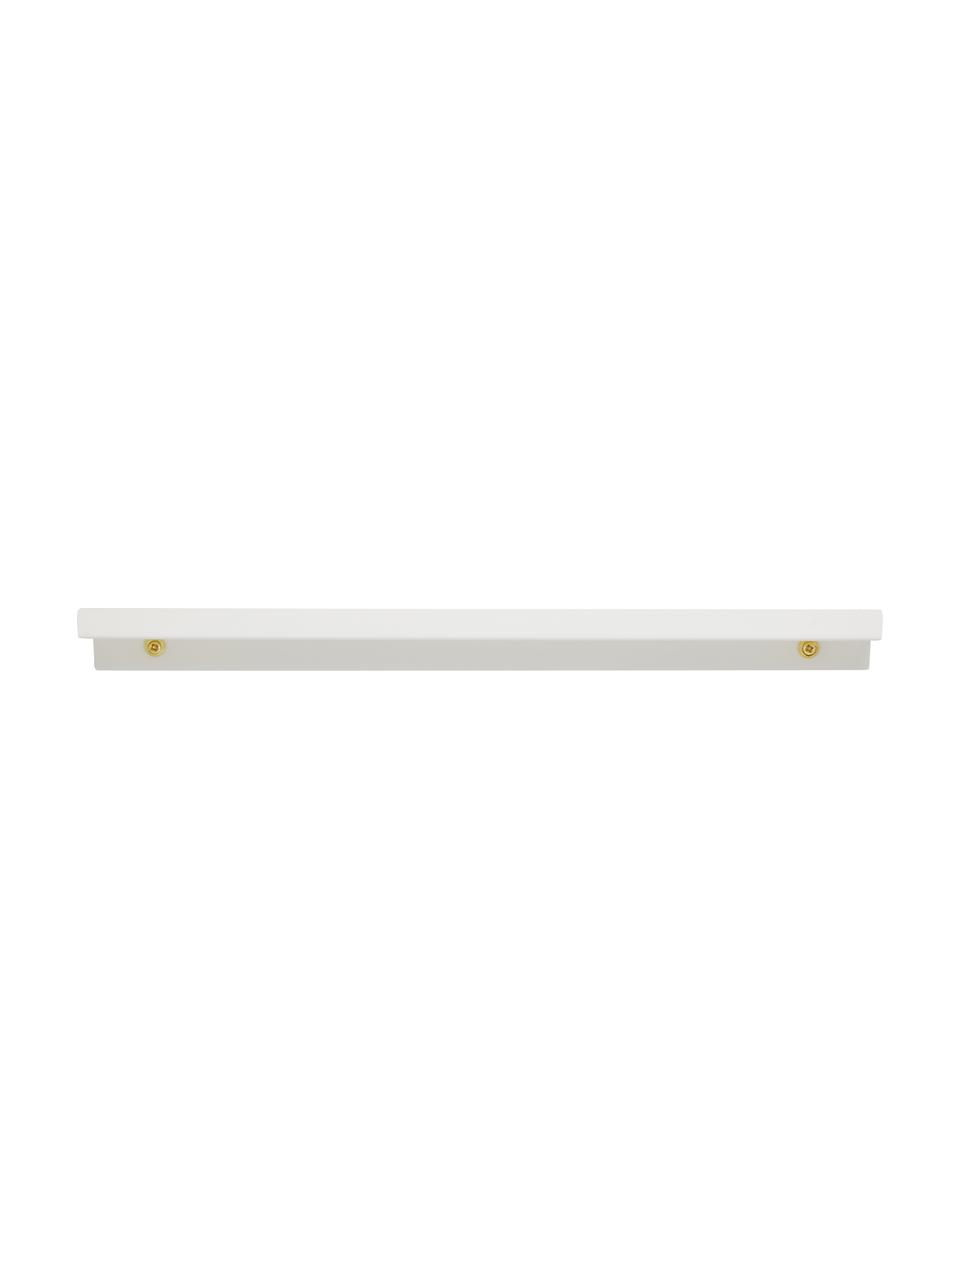 Ripiano bianco opaco Shelfini, Asta: metallo verniciato, Bianco, ottone, Larg. 50 x Alt. 6 cm